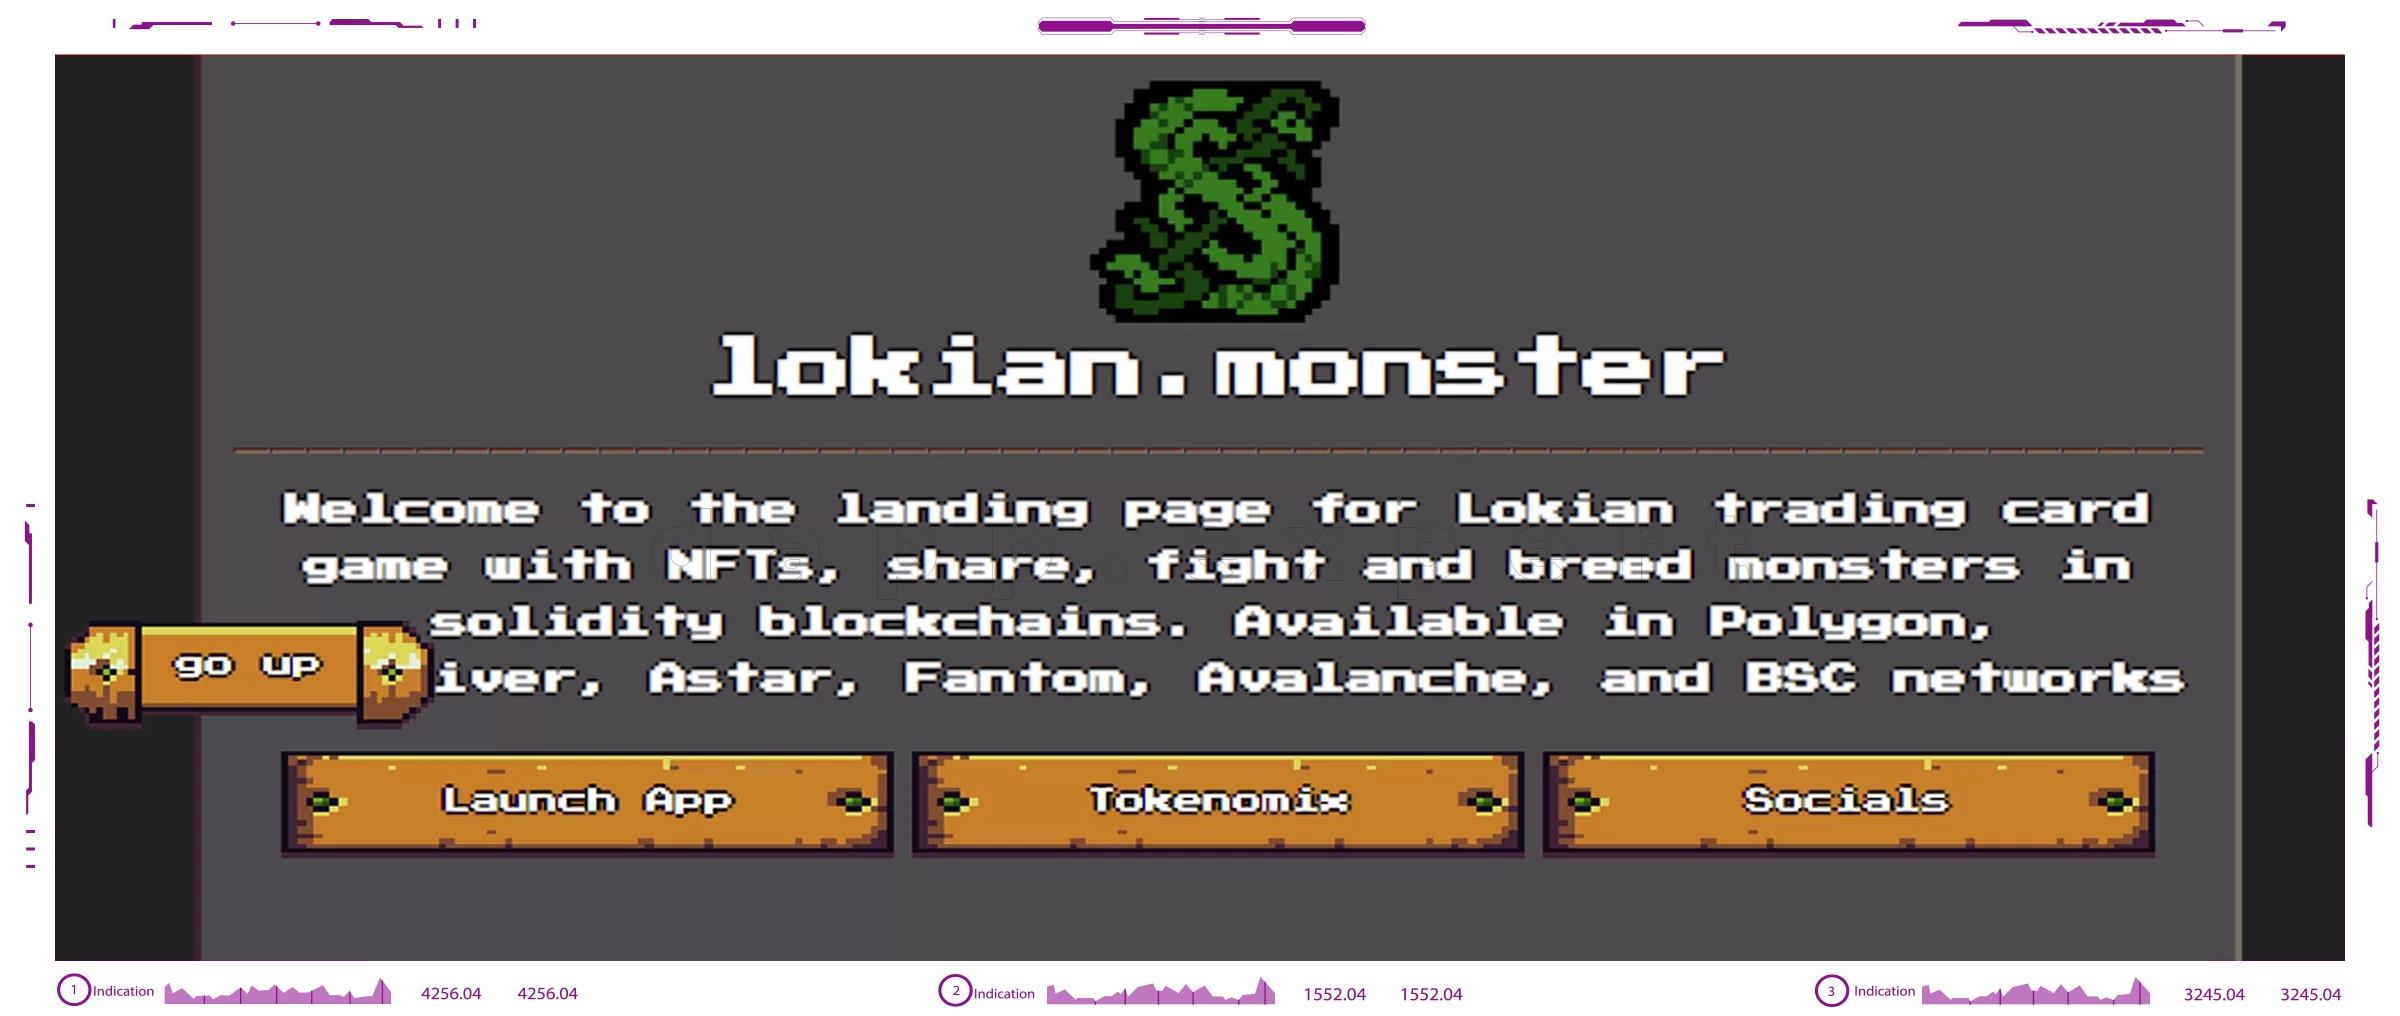 Dapp Lokian Monsters